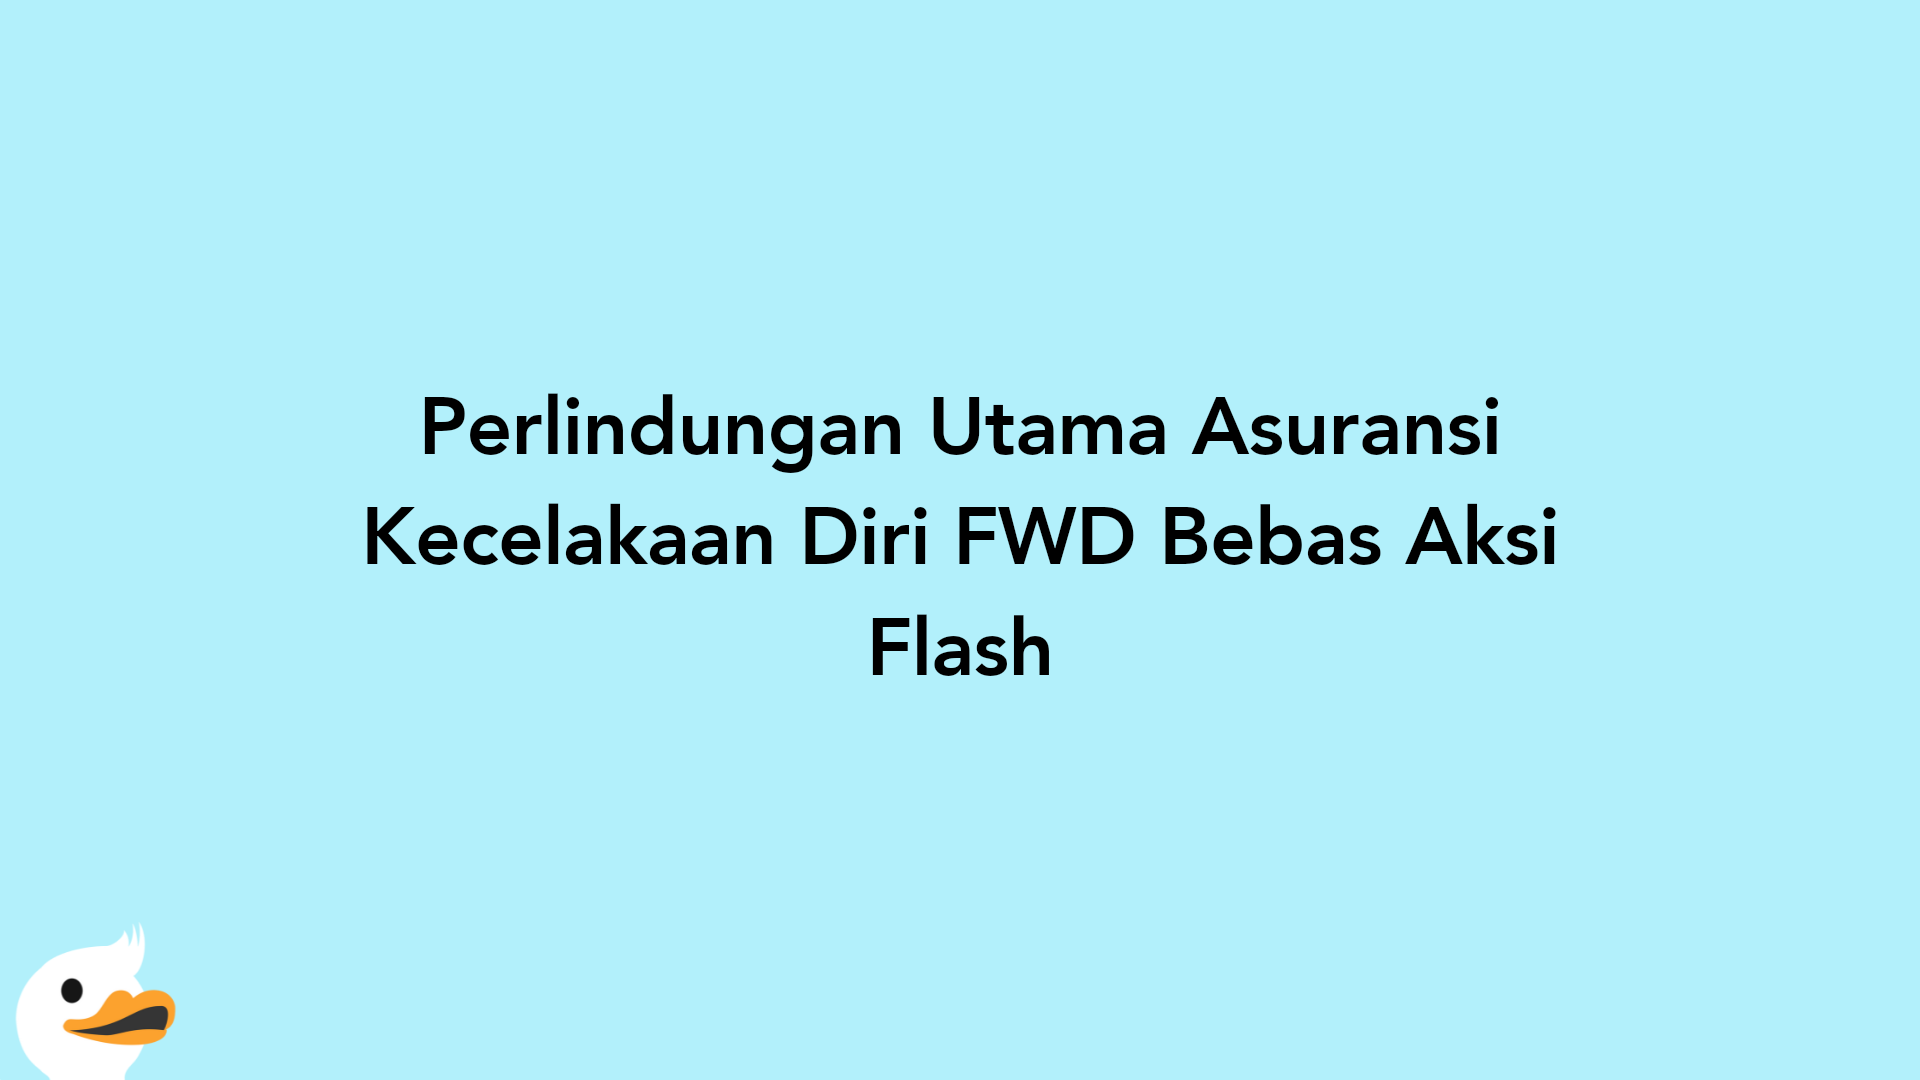 Perlindungan Utama Asuransi Kecelakaan Diri FWD Bebas Aksi Flash